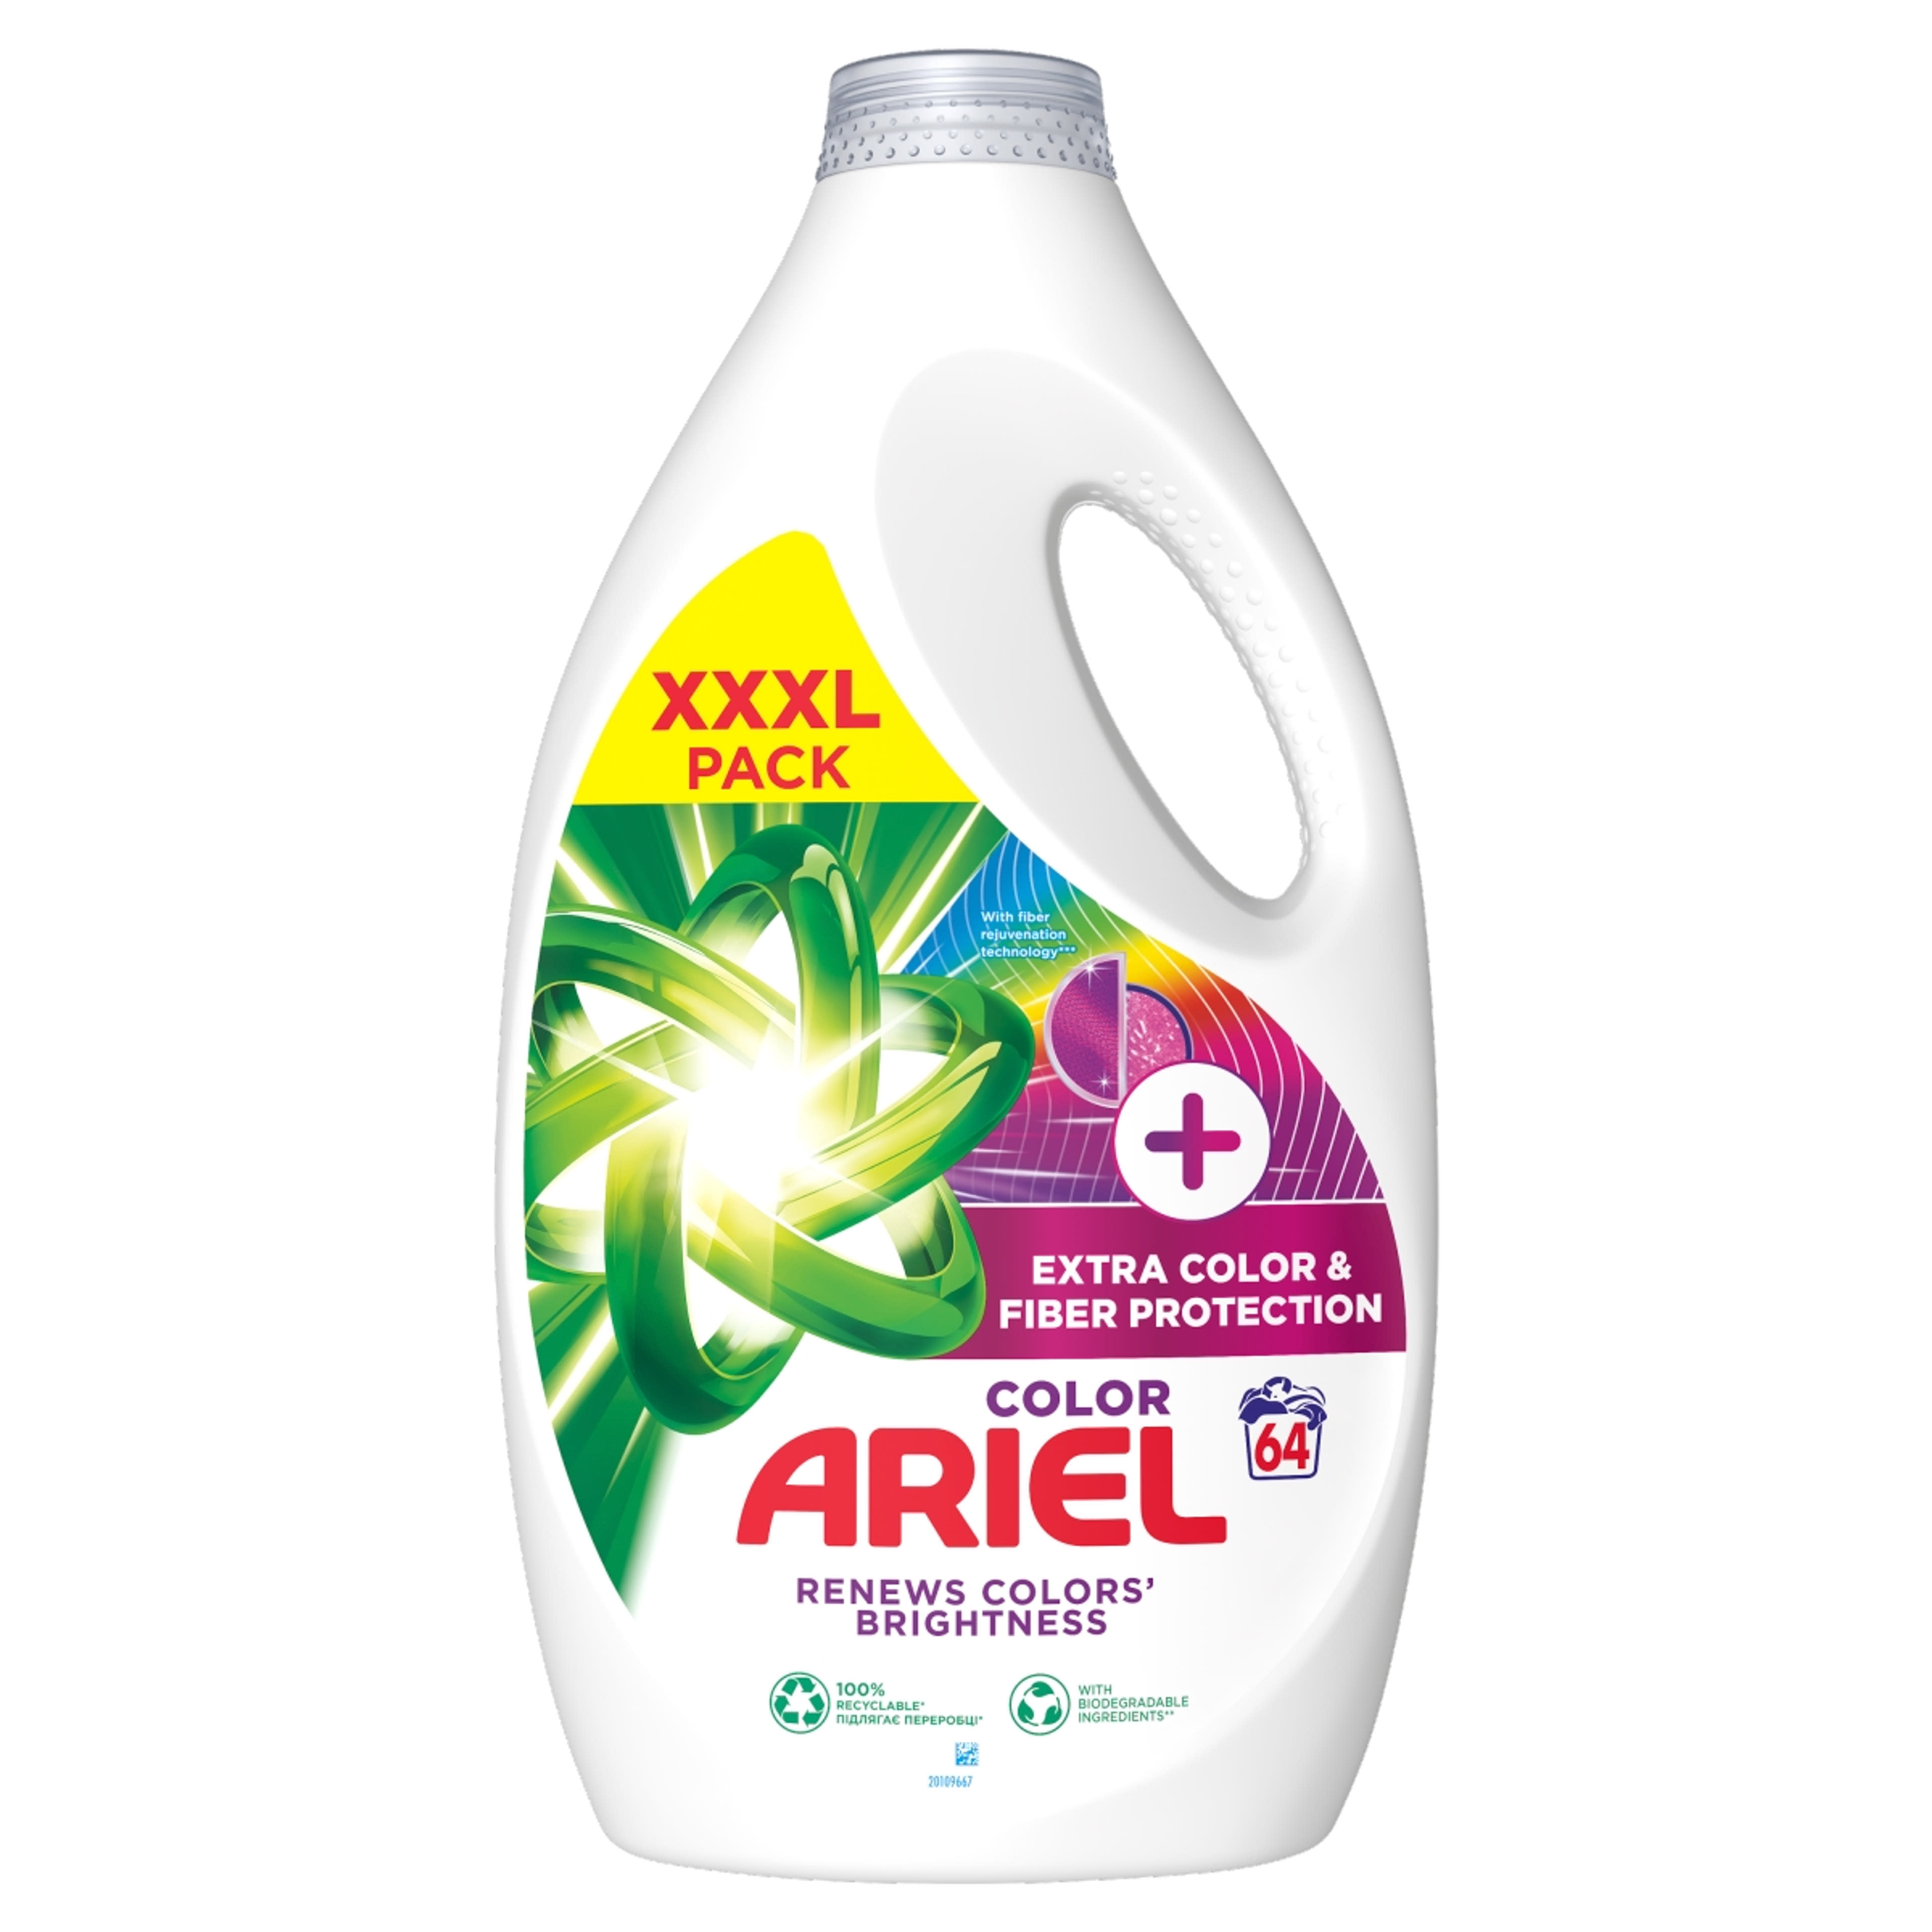 Ariel Complete Fiber Protection folyékony mosószer, 64 mosáshoz - 3200 ml